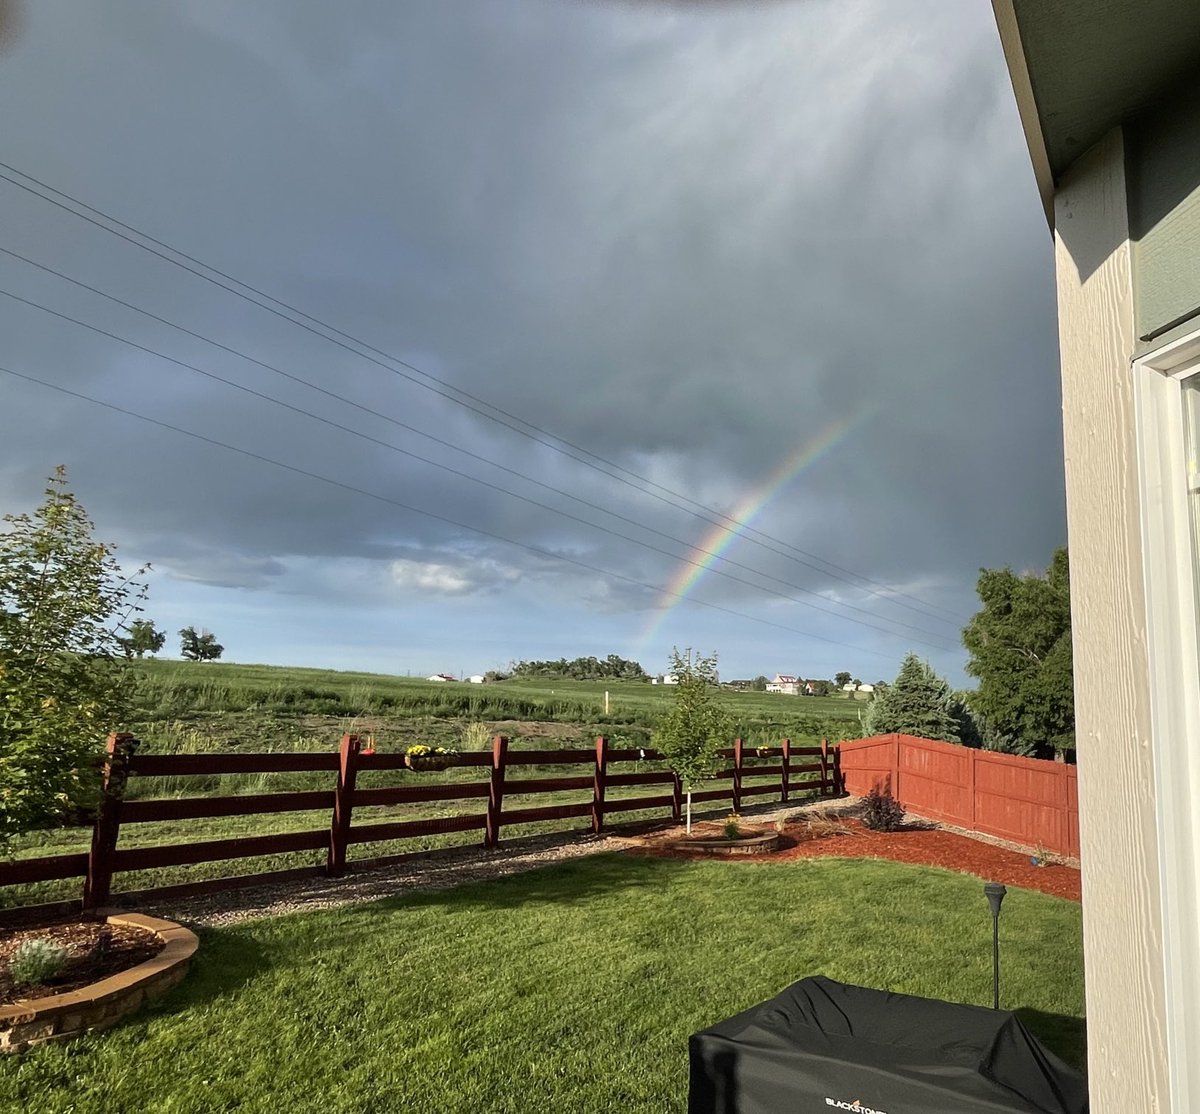 Always a rainbow after a storm 🌈💜